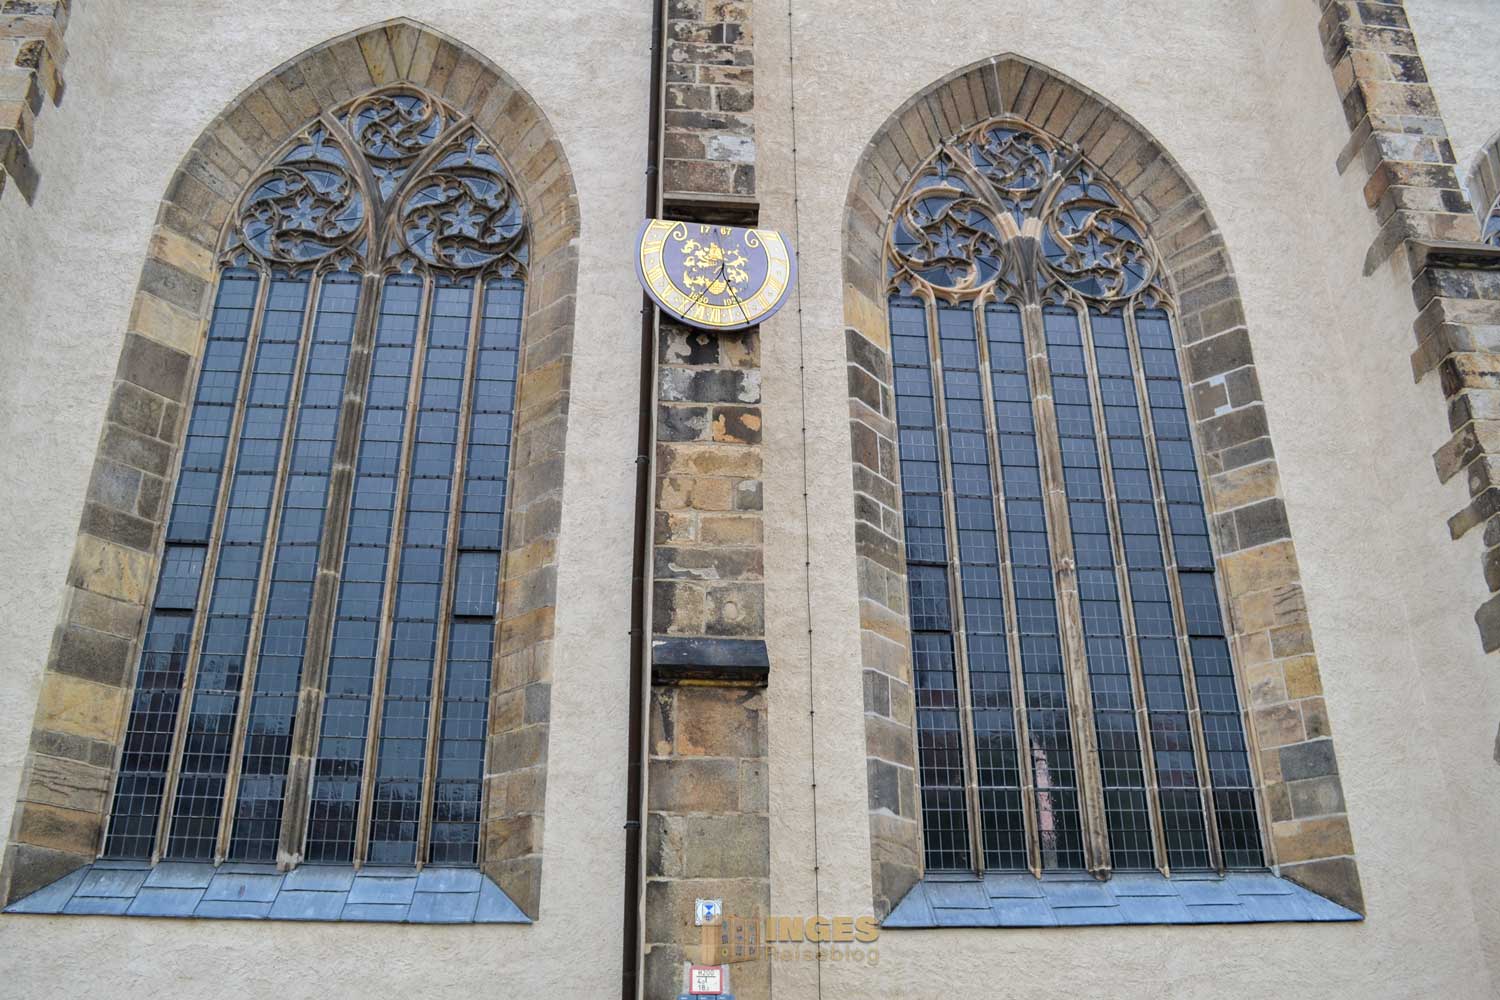 Dom St. Petri zu Bautzen